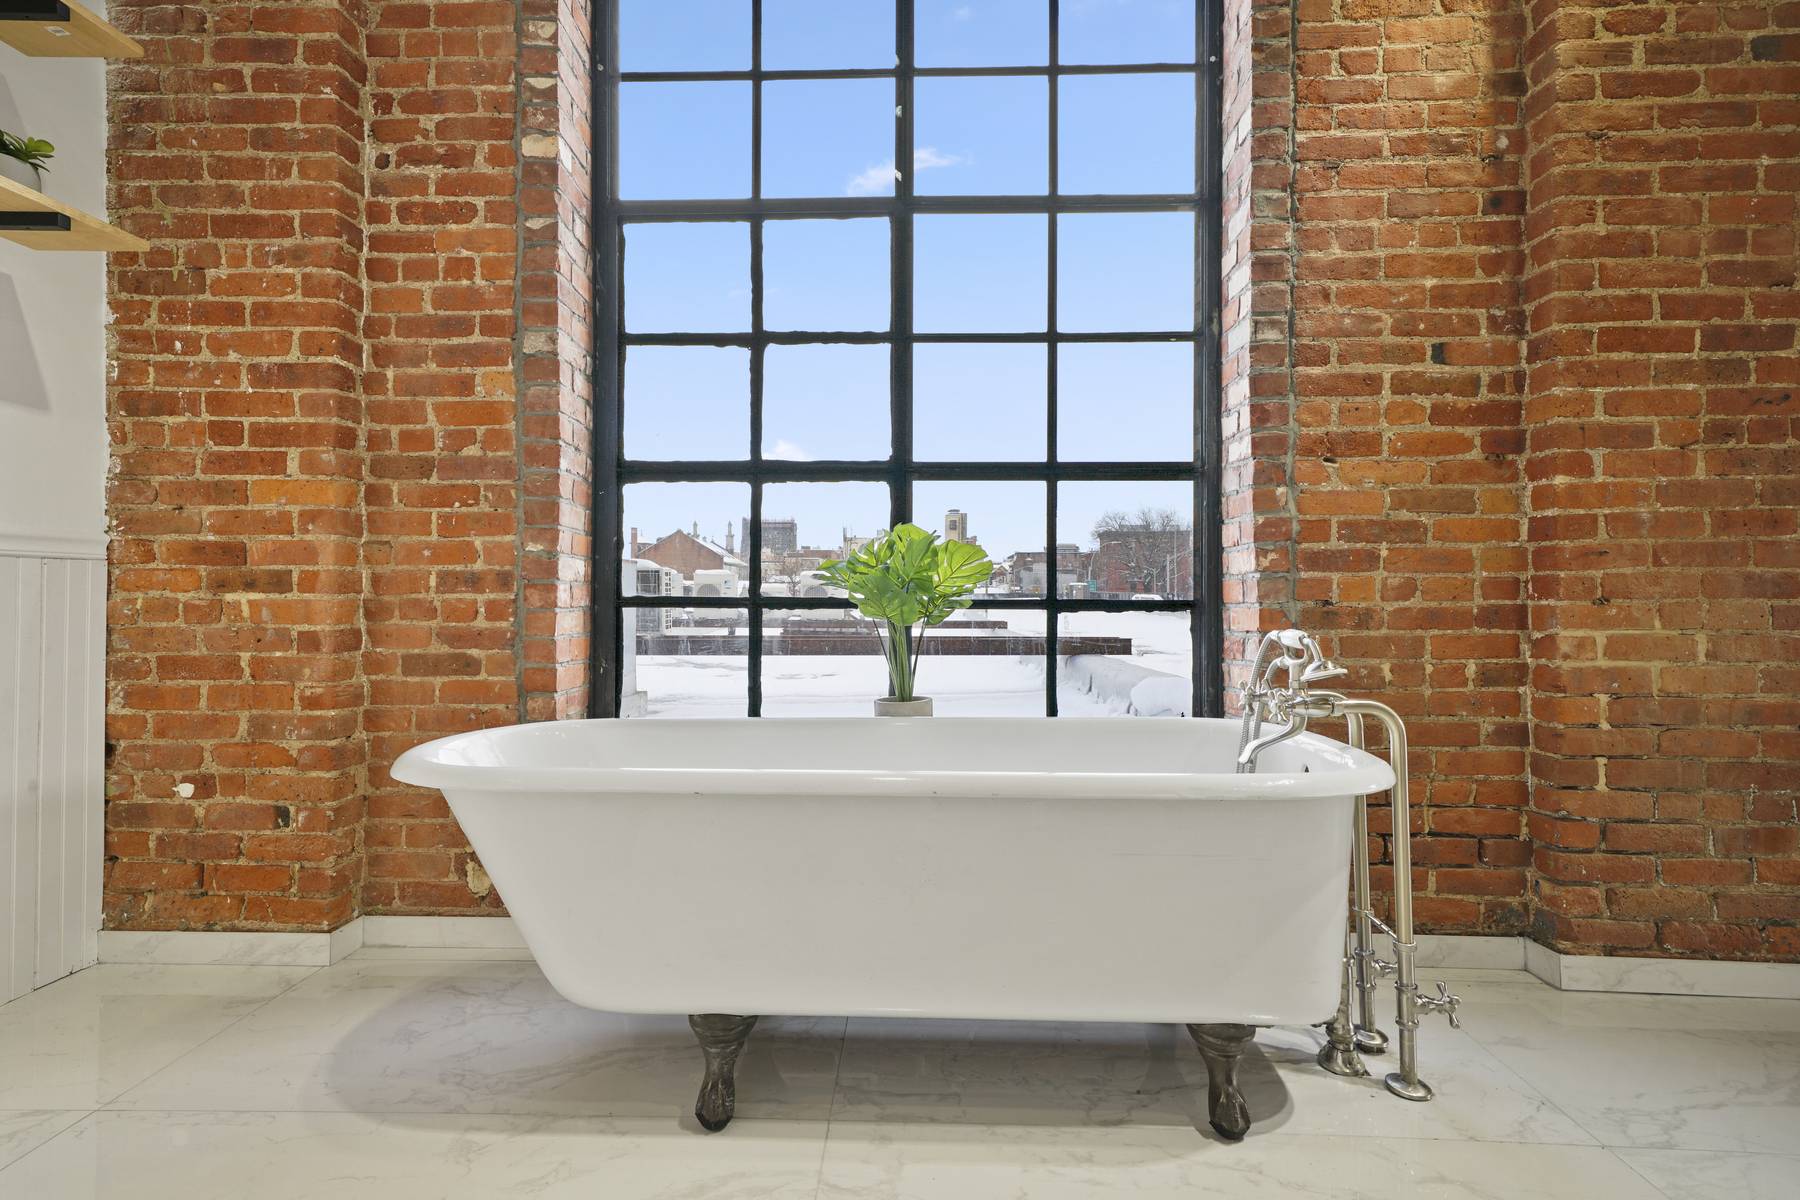 bath tub next to a big window overlooking the city - photo studio setup